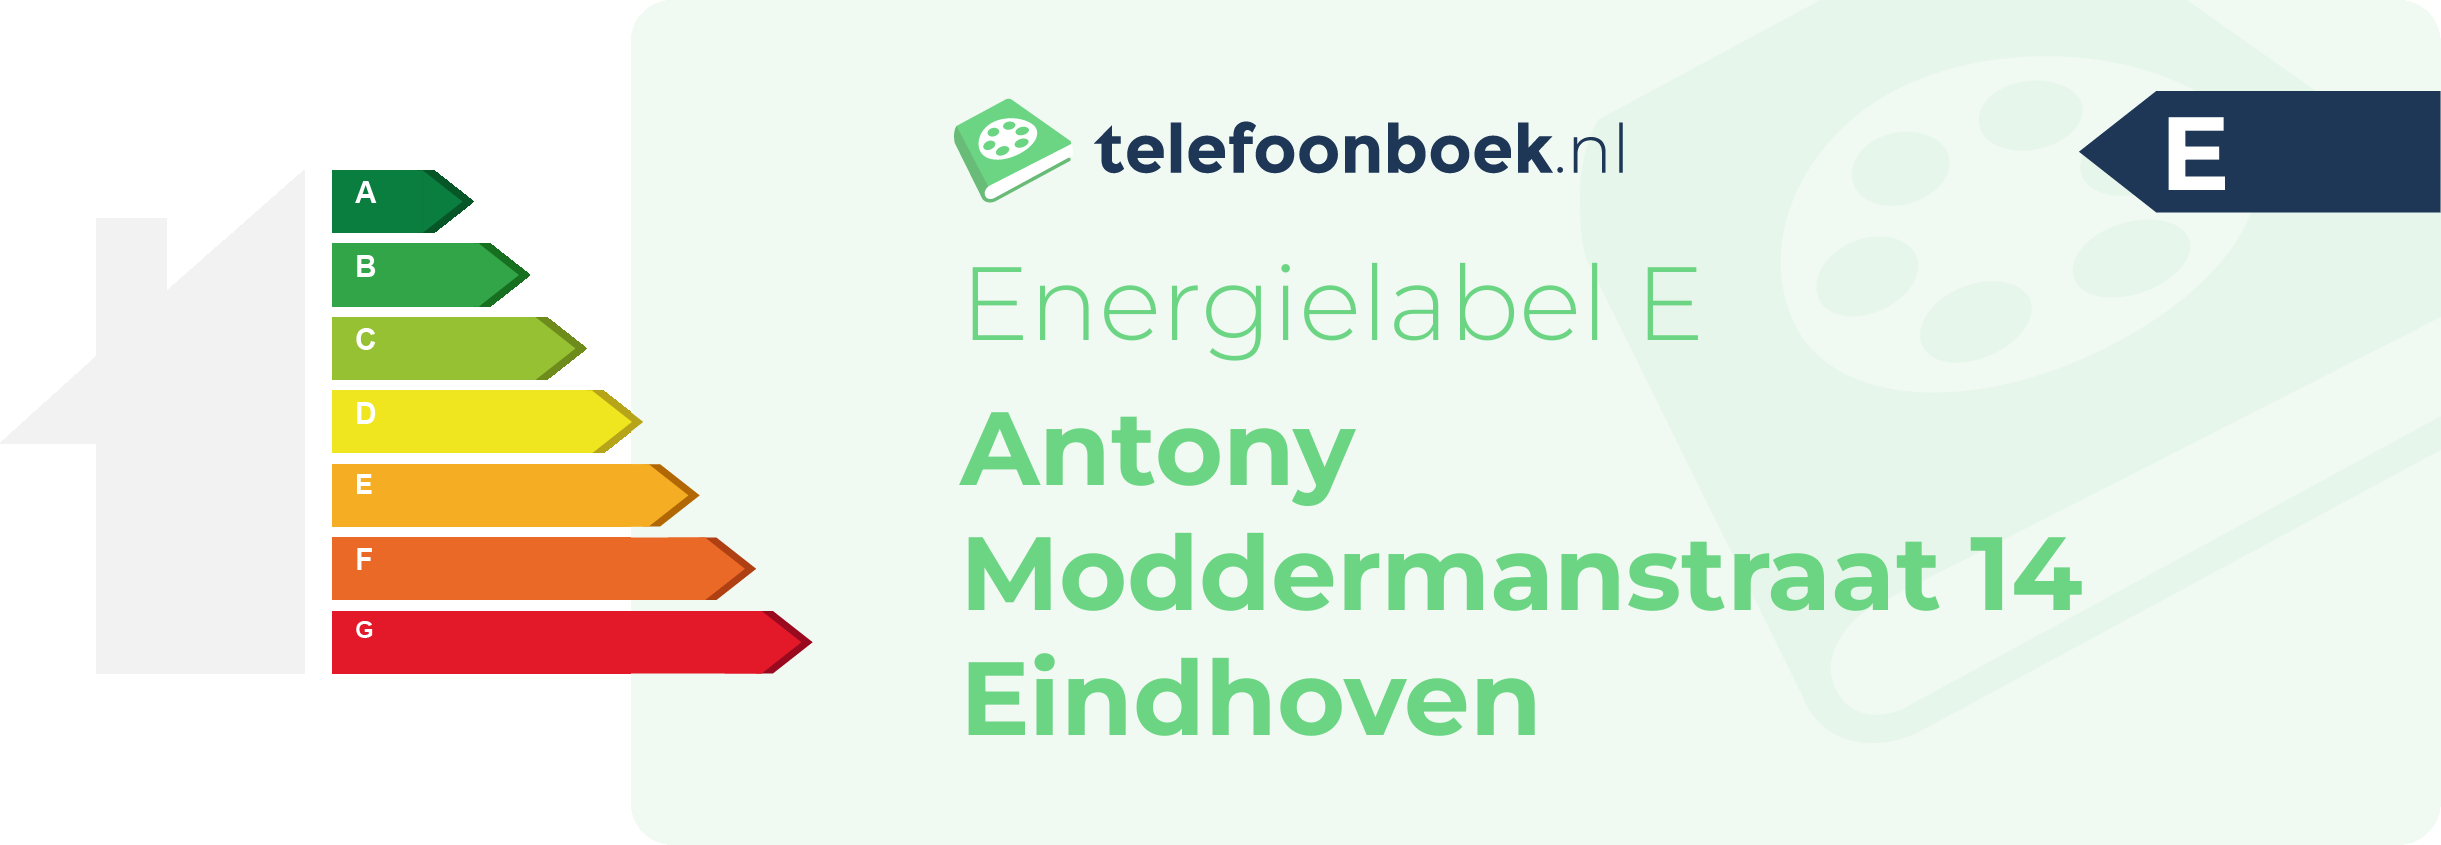 Energielabel Antony Moddermanstraat 14 Eindhoven